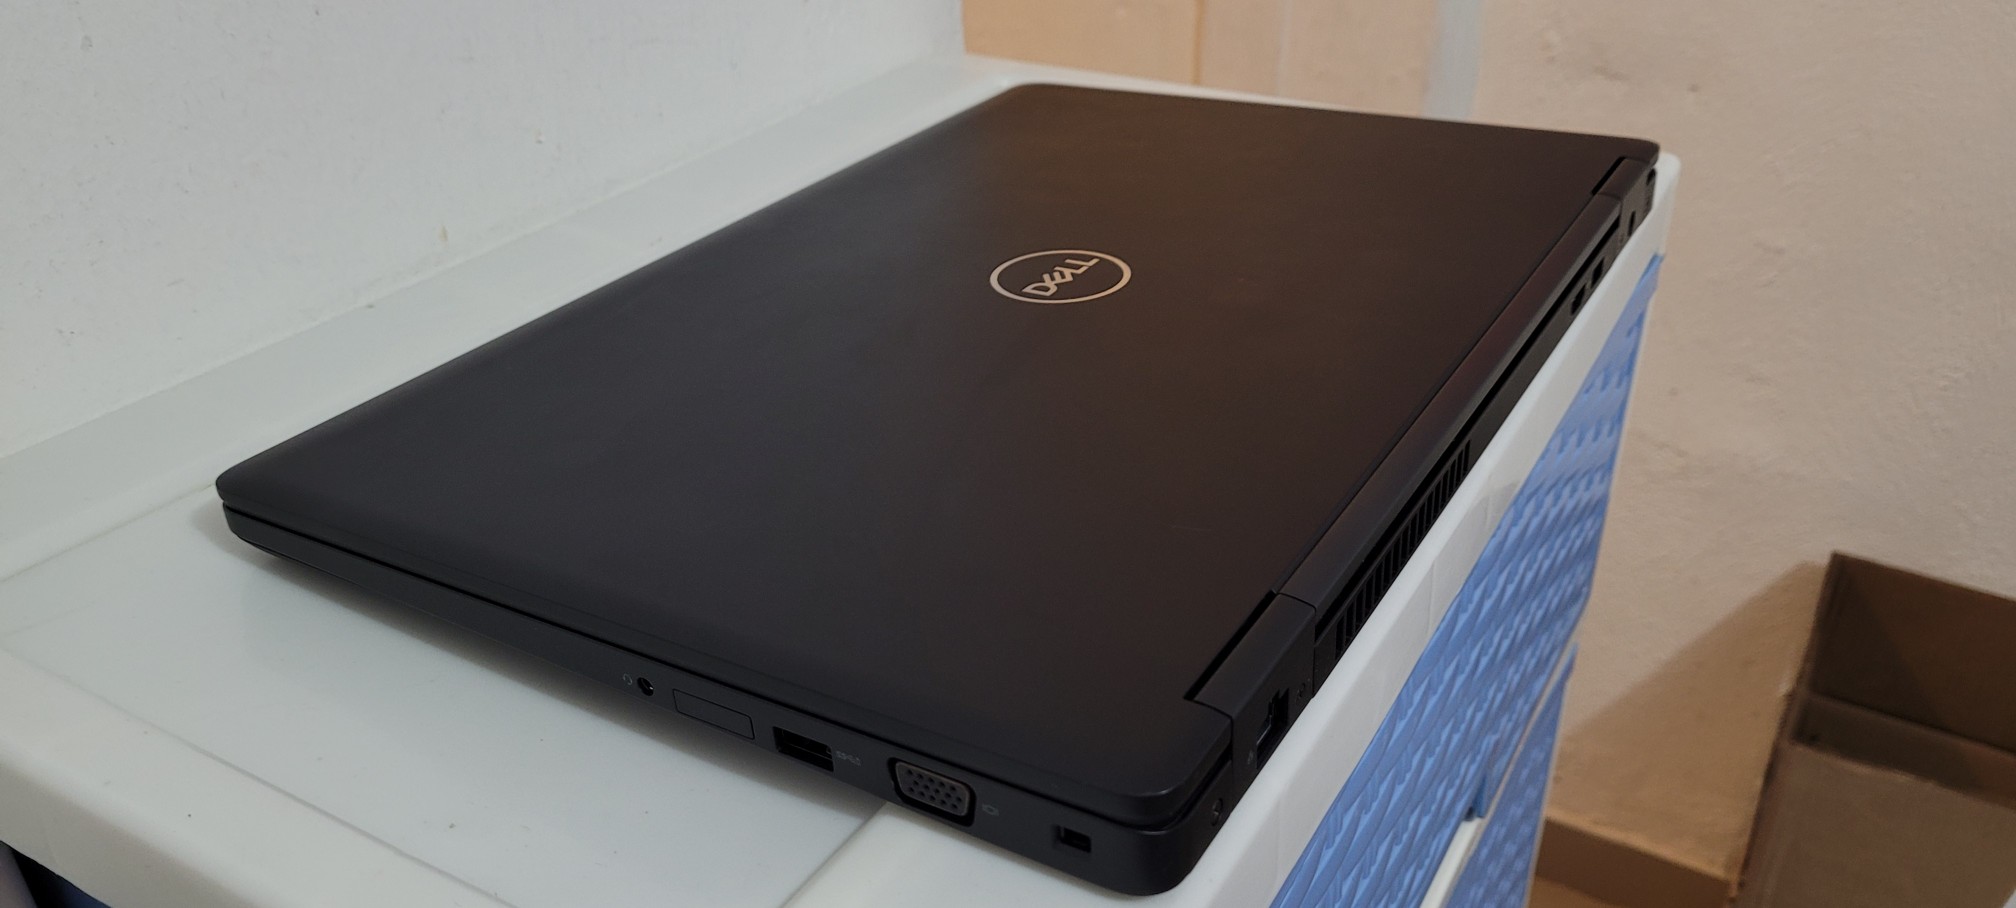 computadoras y laptops - Laptop Dell 5570 17 Pulg Core i7 6ta Ram 16gb ddr4 Disco 256gb SSD Video 8gb 2